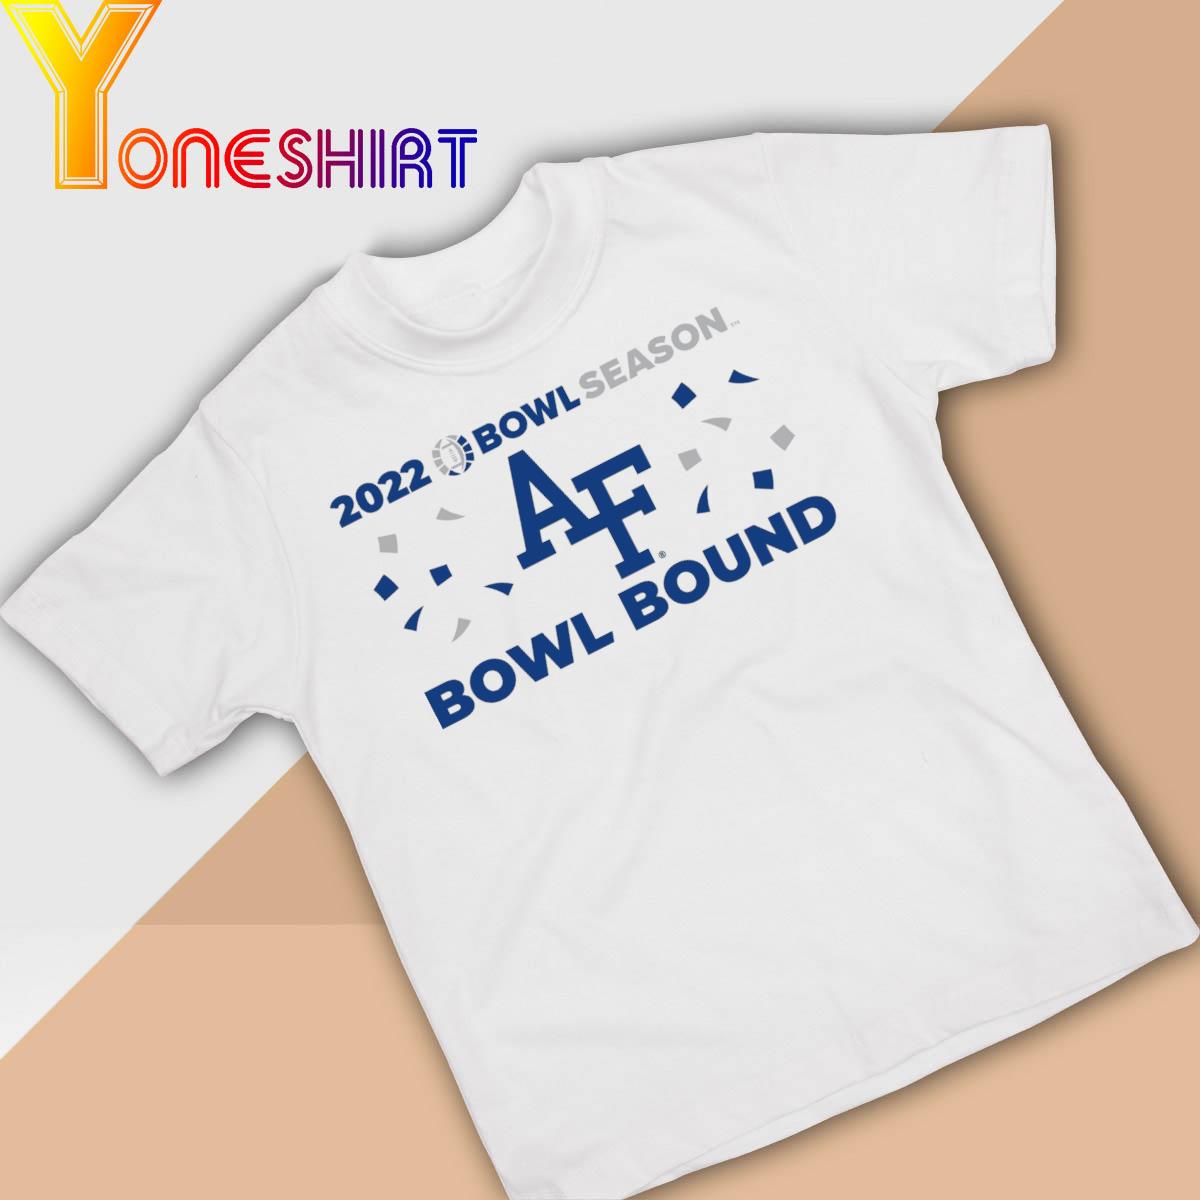 US Air Force Academy 2022 Bowl Season Bowl Considered shirt